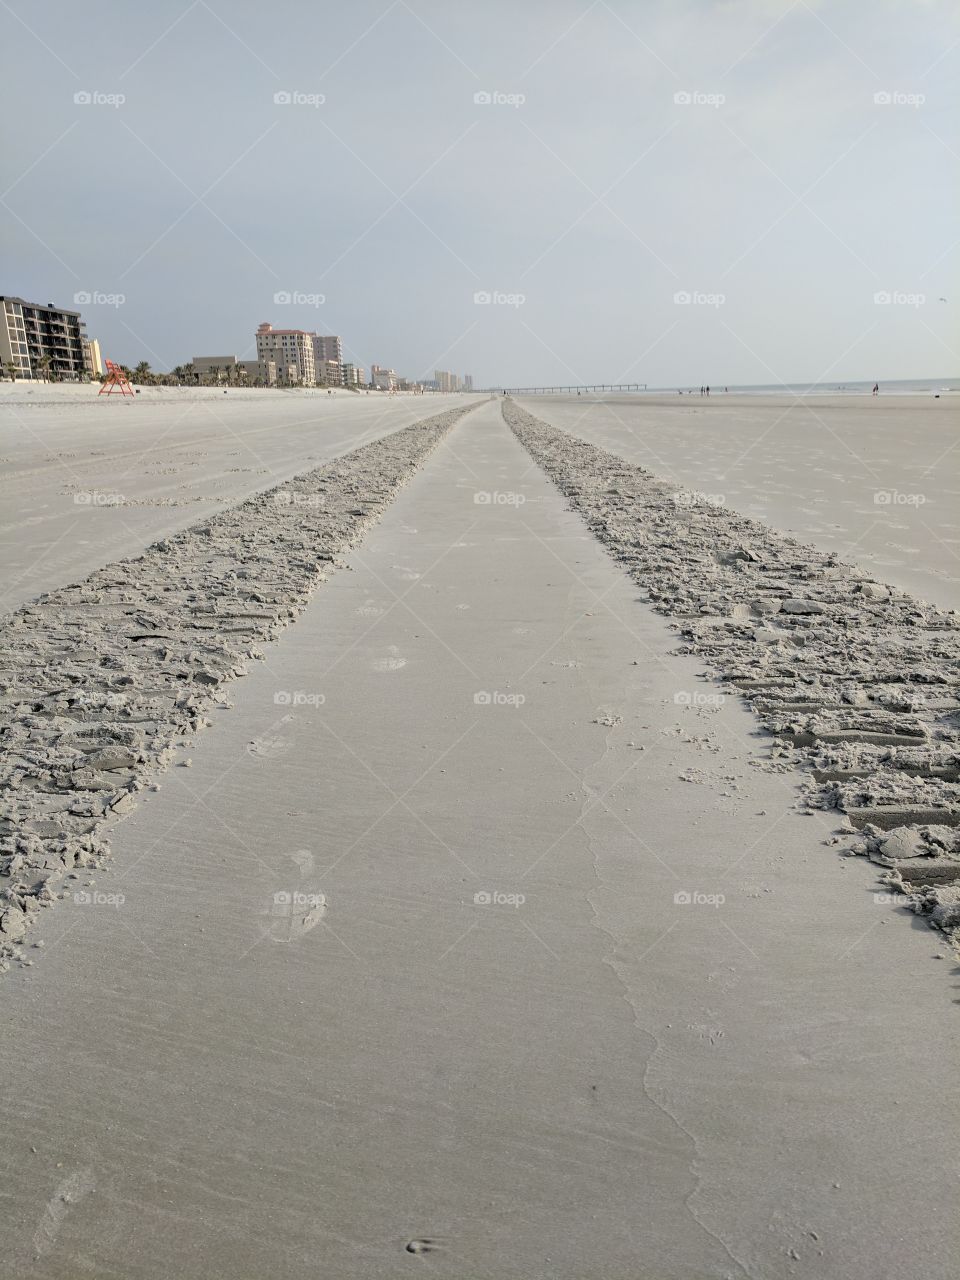 Beach Tracks